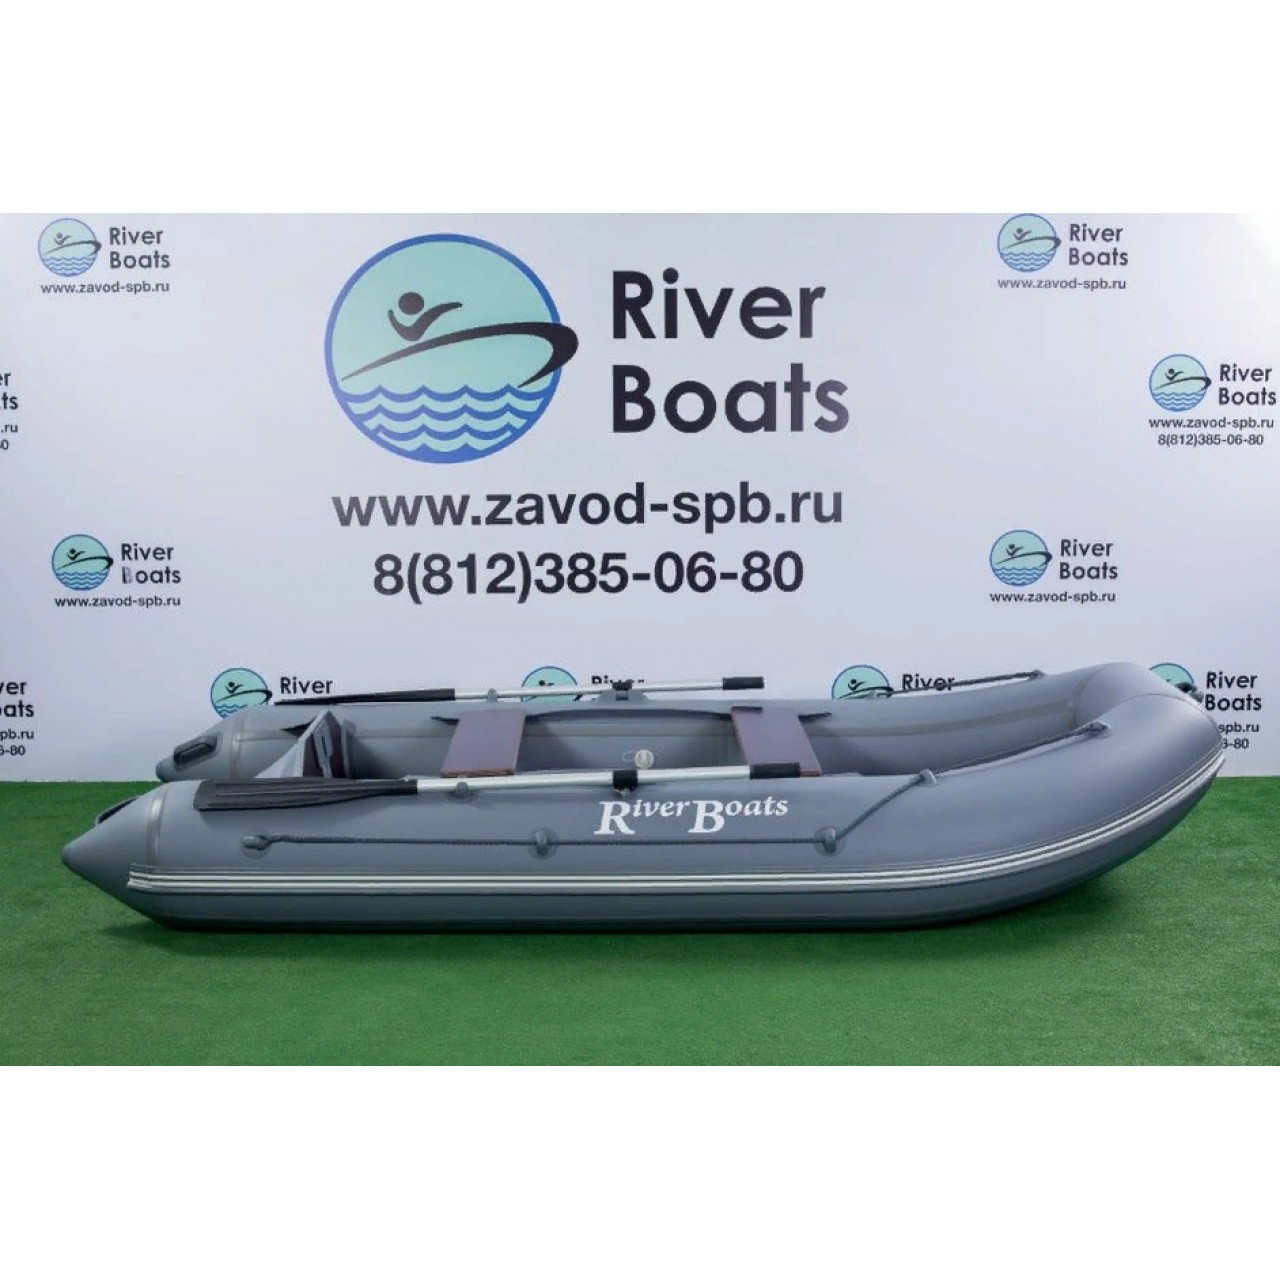 River Boats RB 300 (Киль)